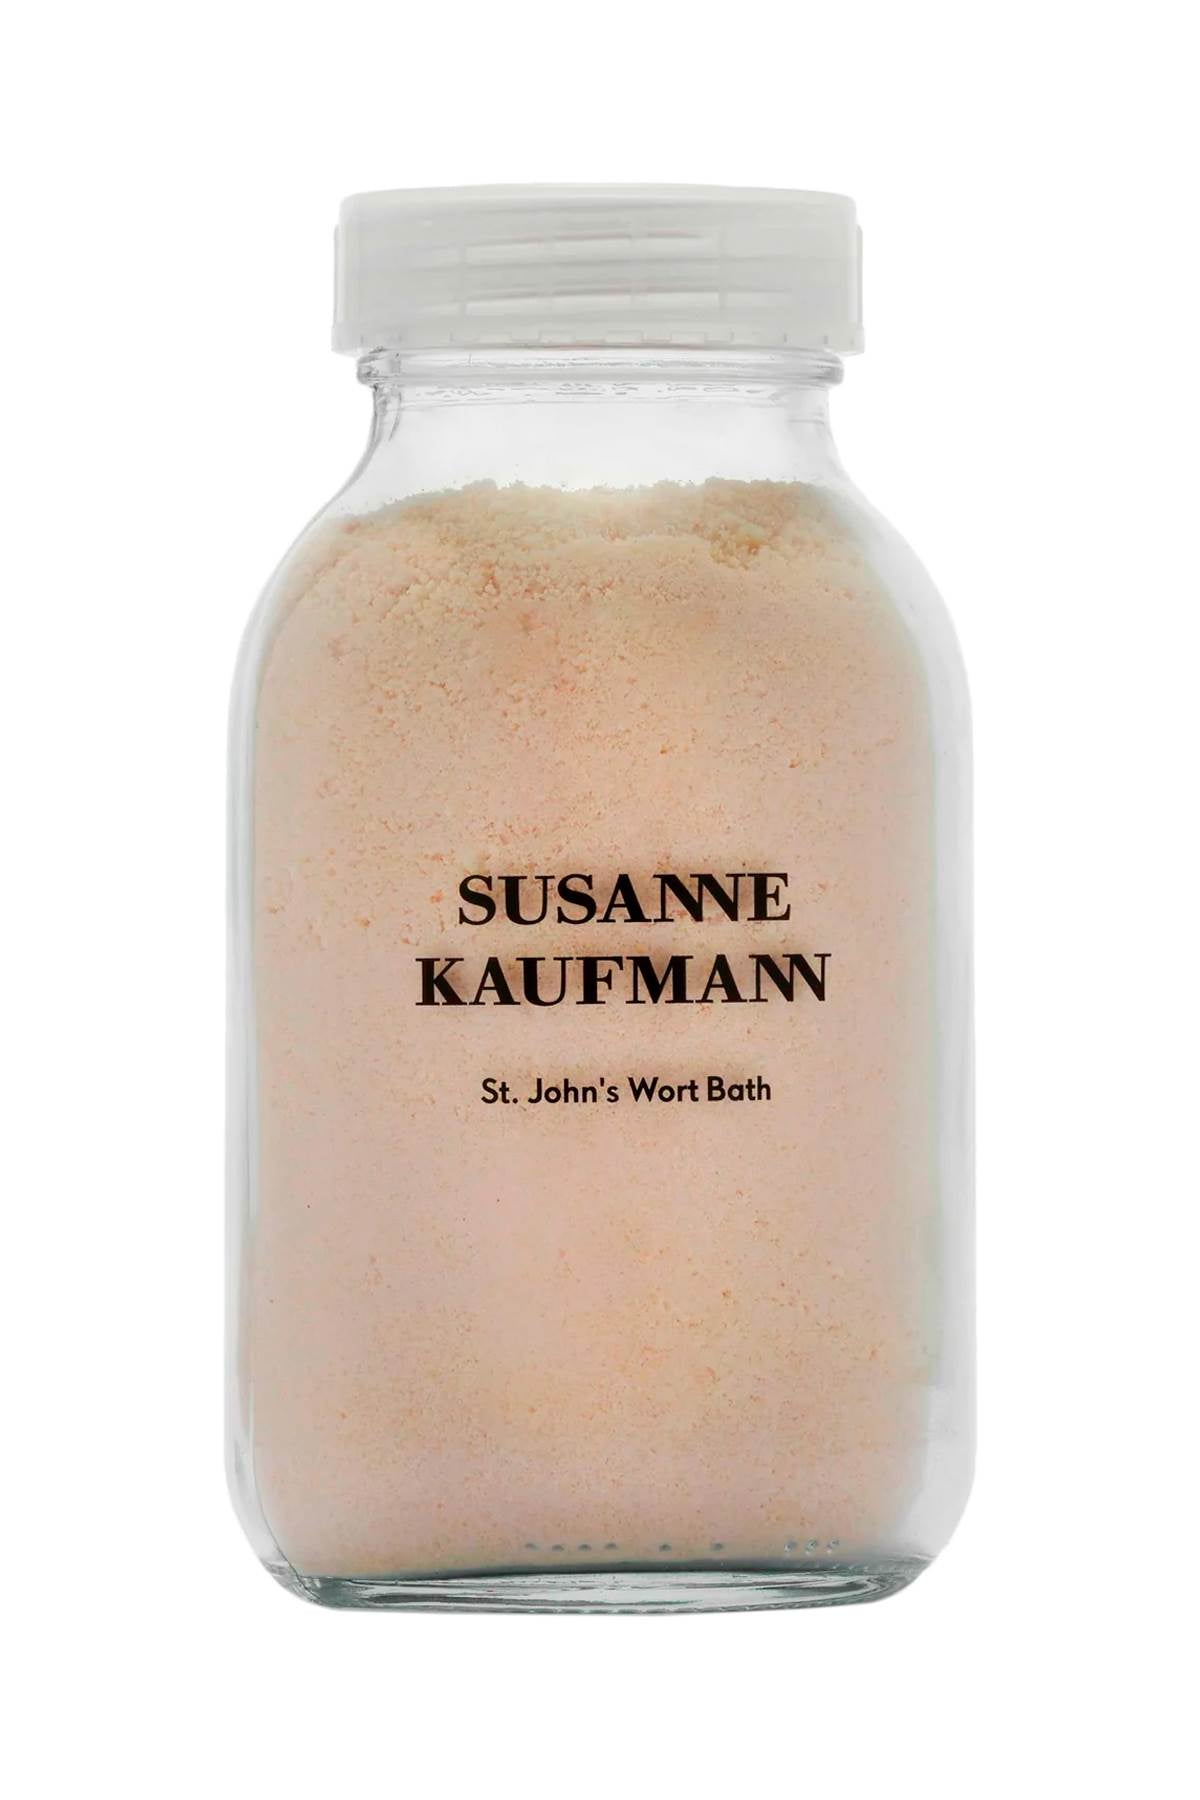 Susanne kaufmann st' john's wort bath - 400 g-0